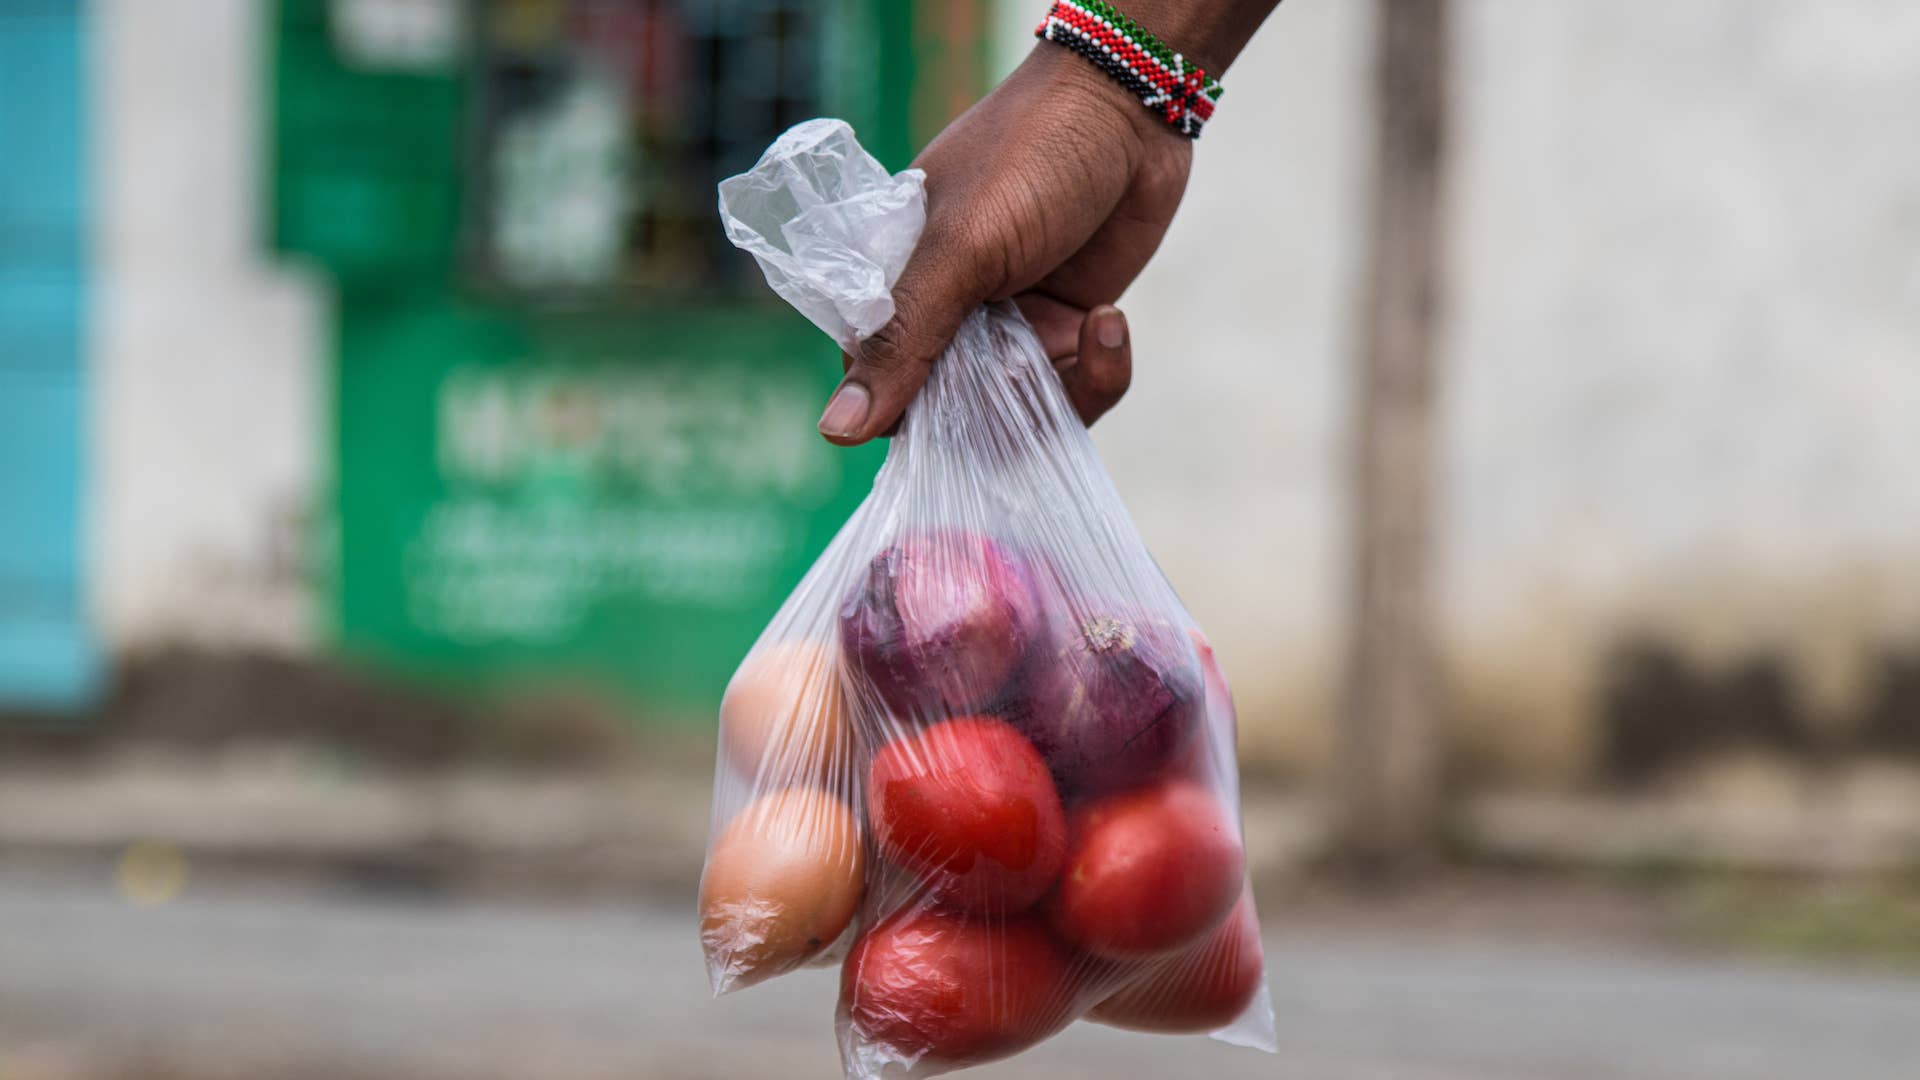 Photograph of man holding produce bag